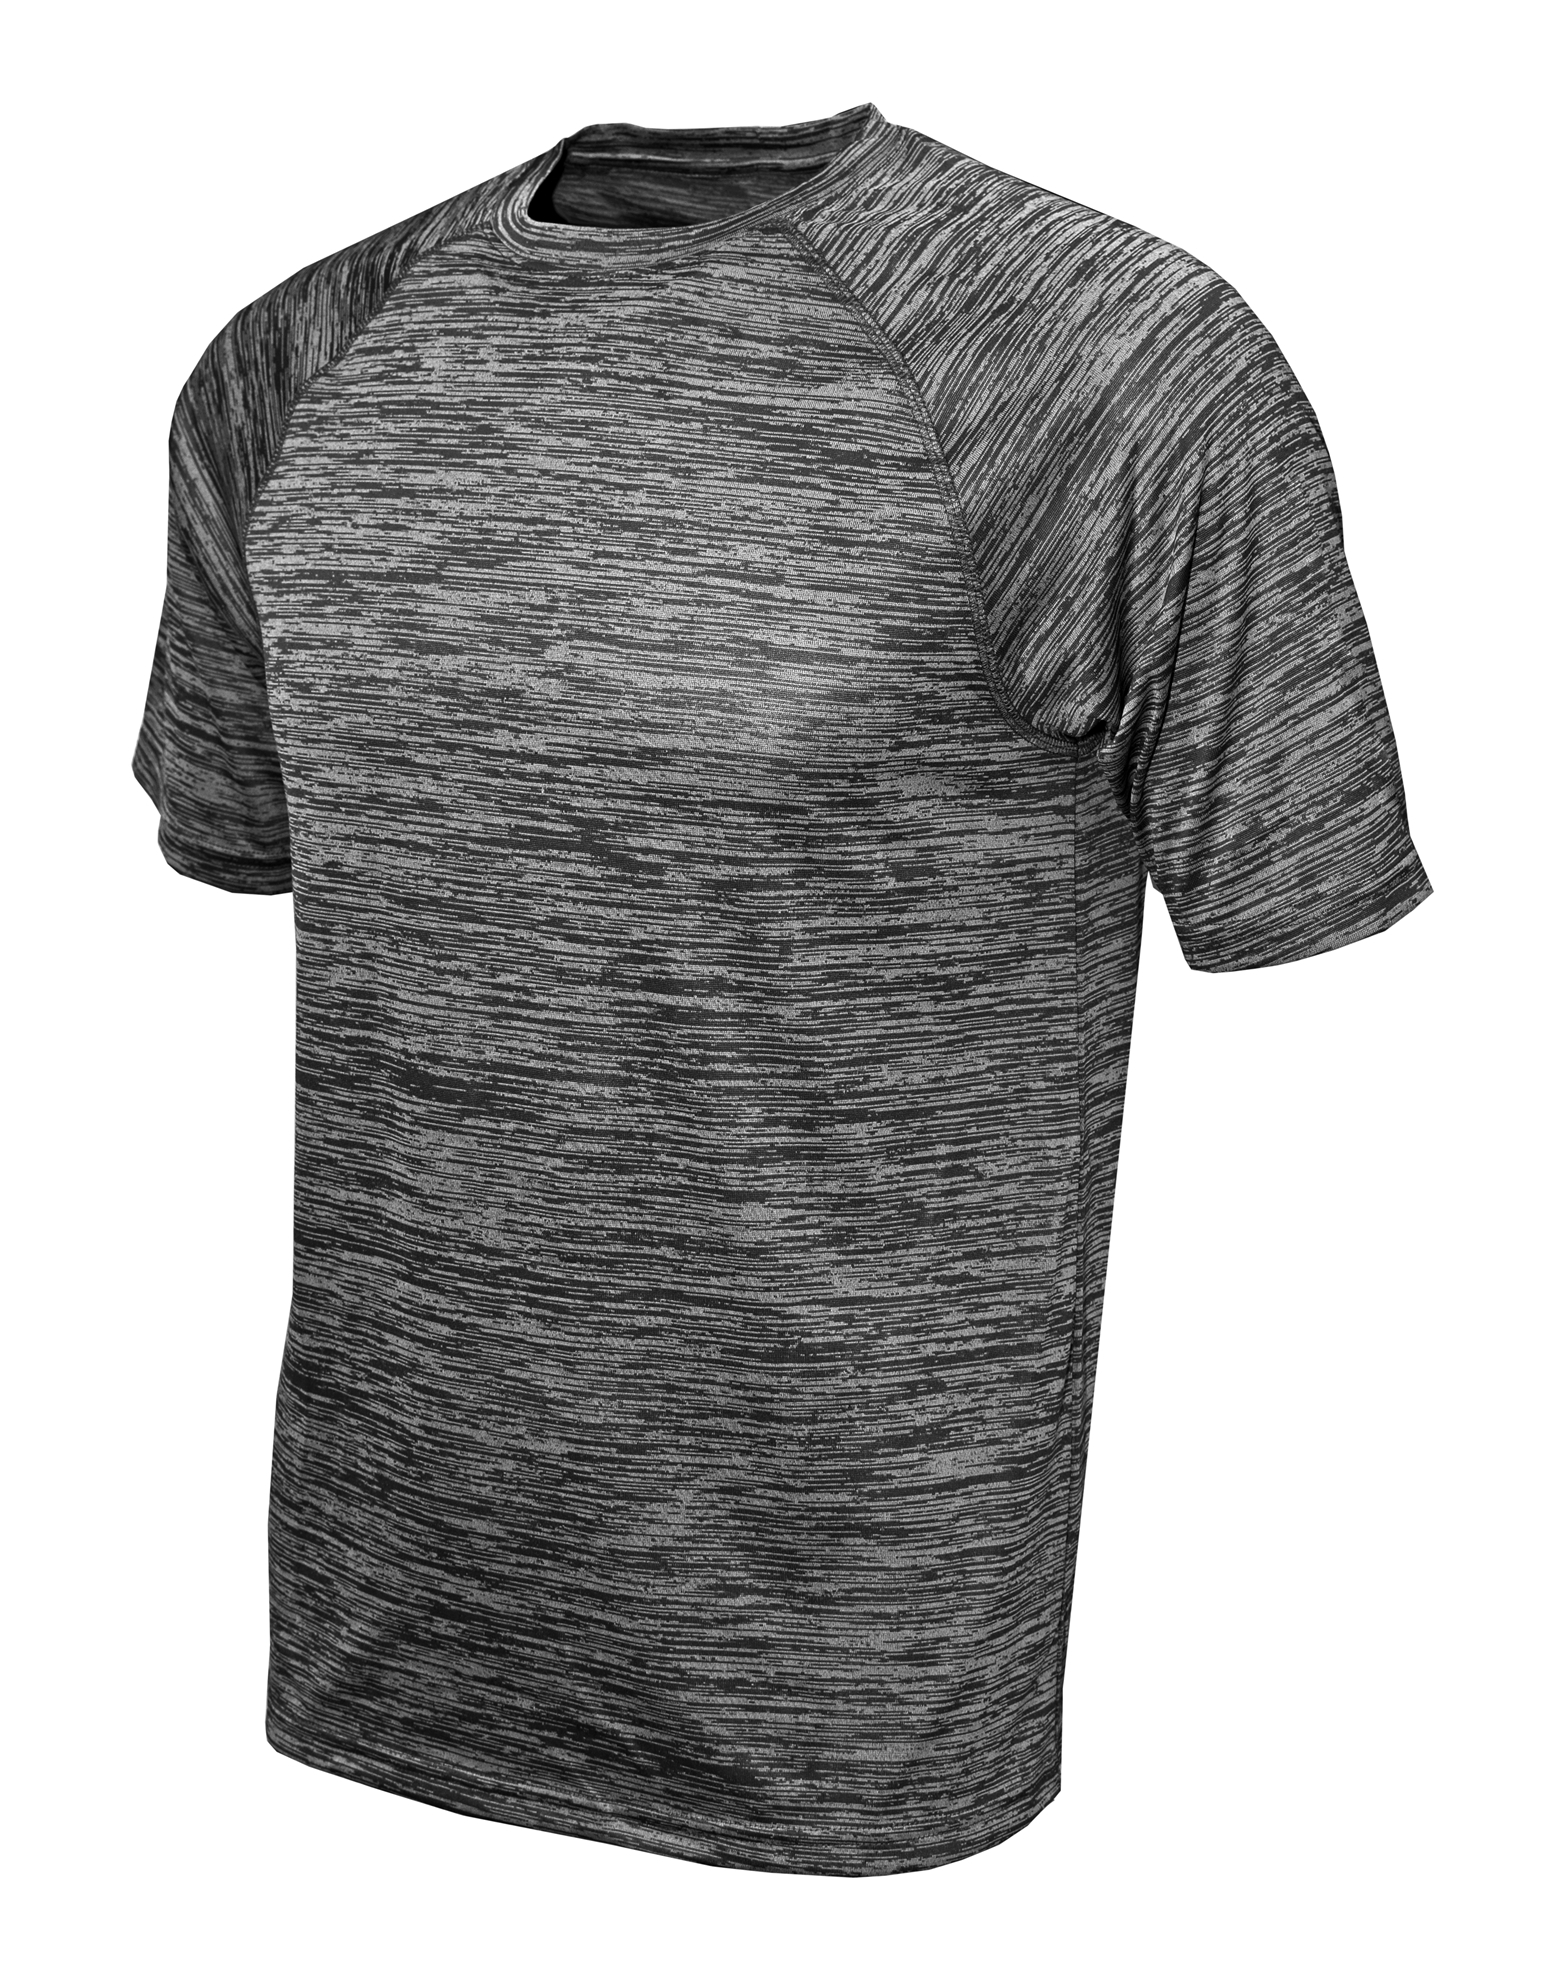 BAW Athletic Wear DT56 - Men's Dry-Tek T-Shirt